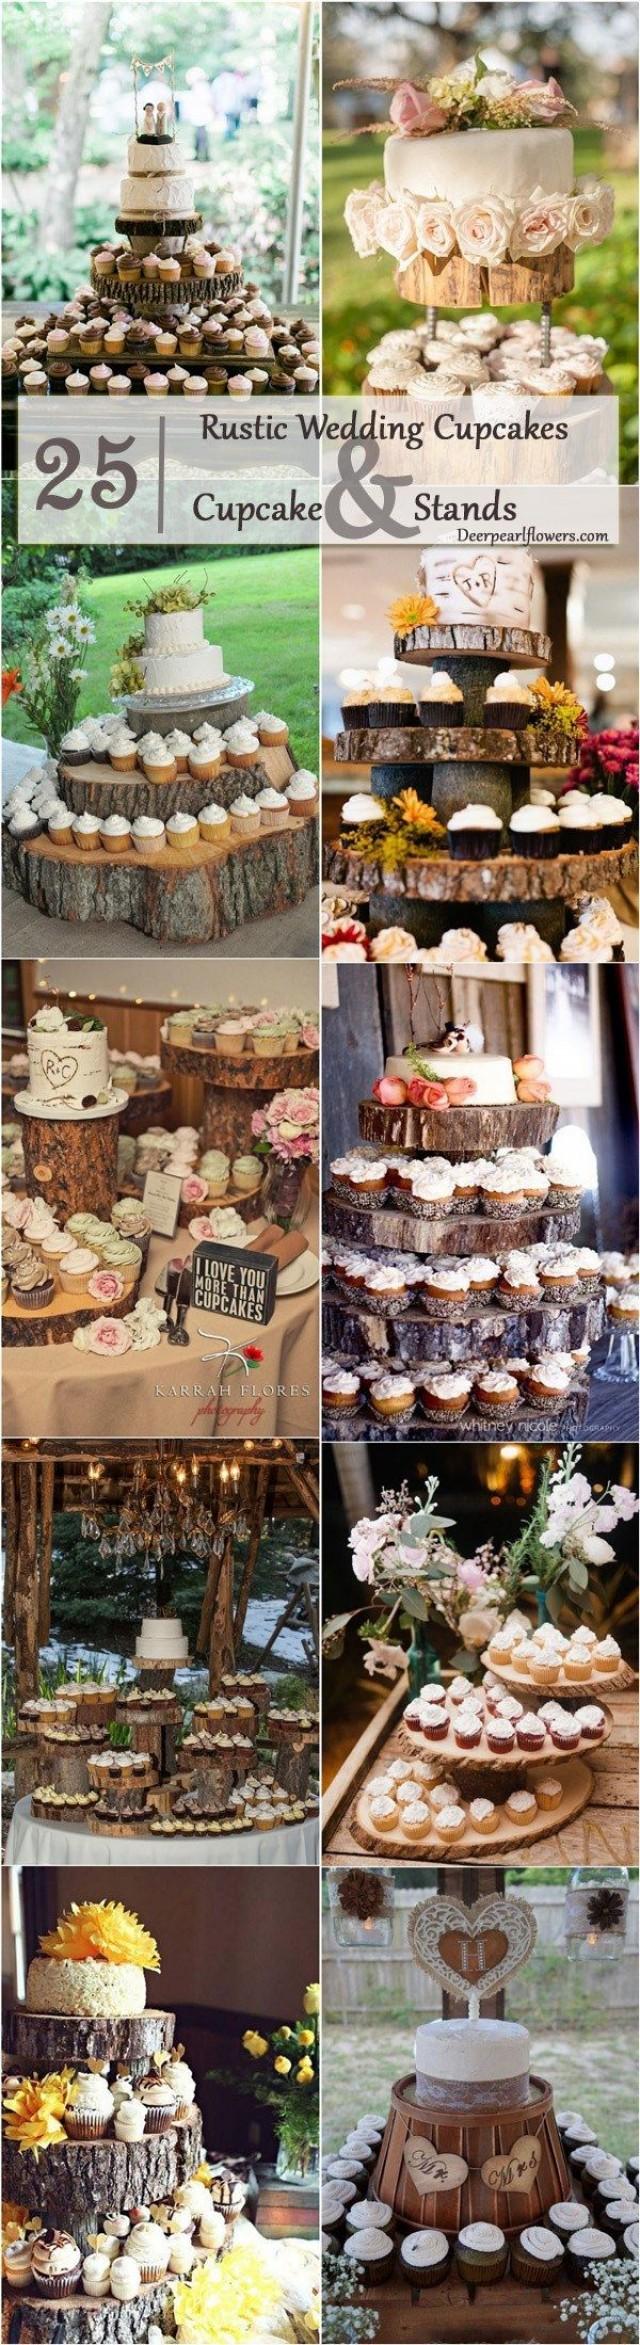 wedding photo - 25 Amazing Rustic Wedding Cupcakes & Stands